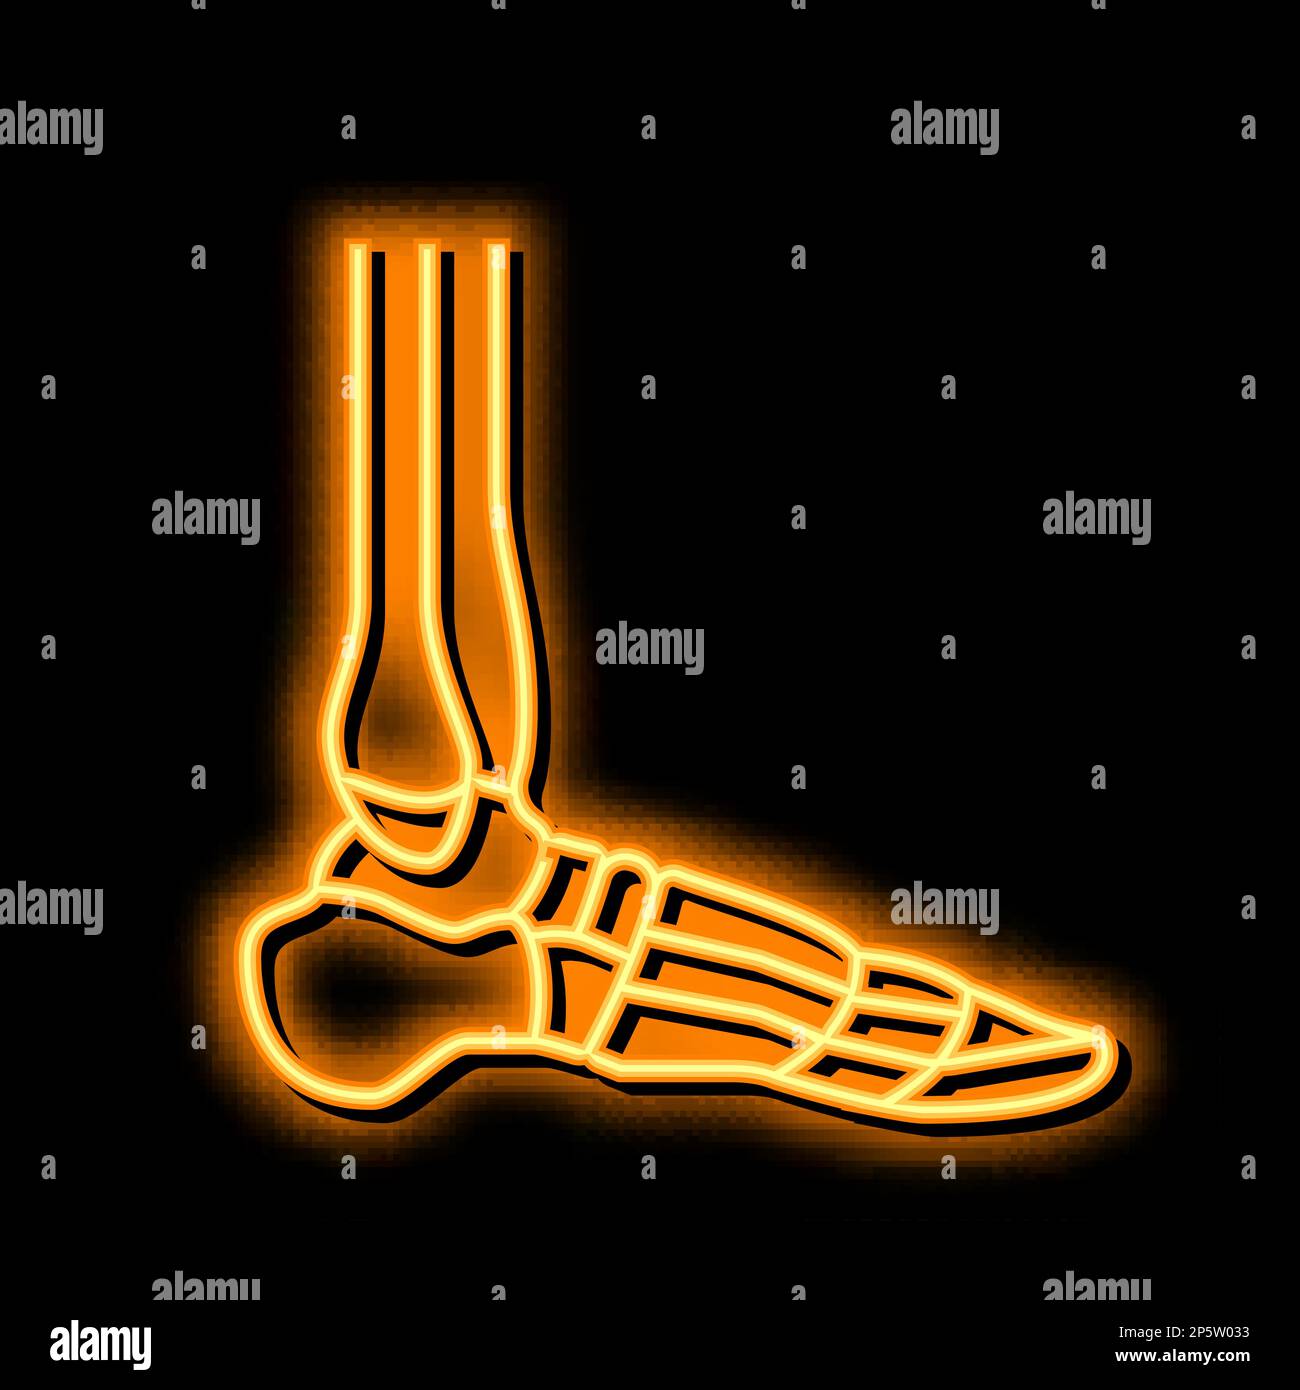 ankle bone neon glow icon illustration Stock Vector